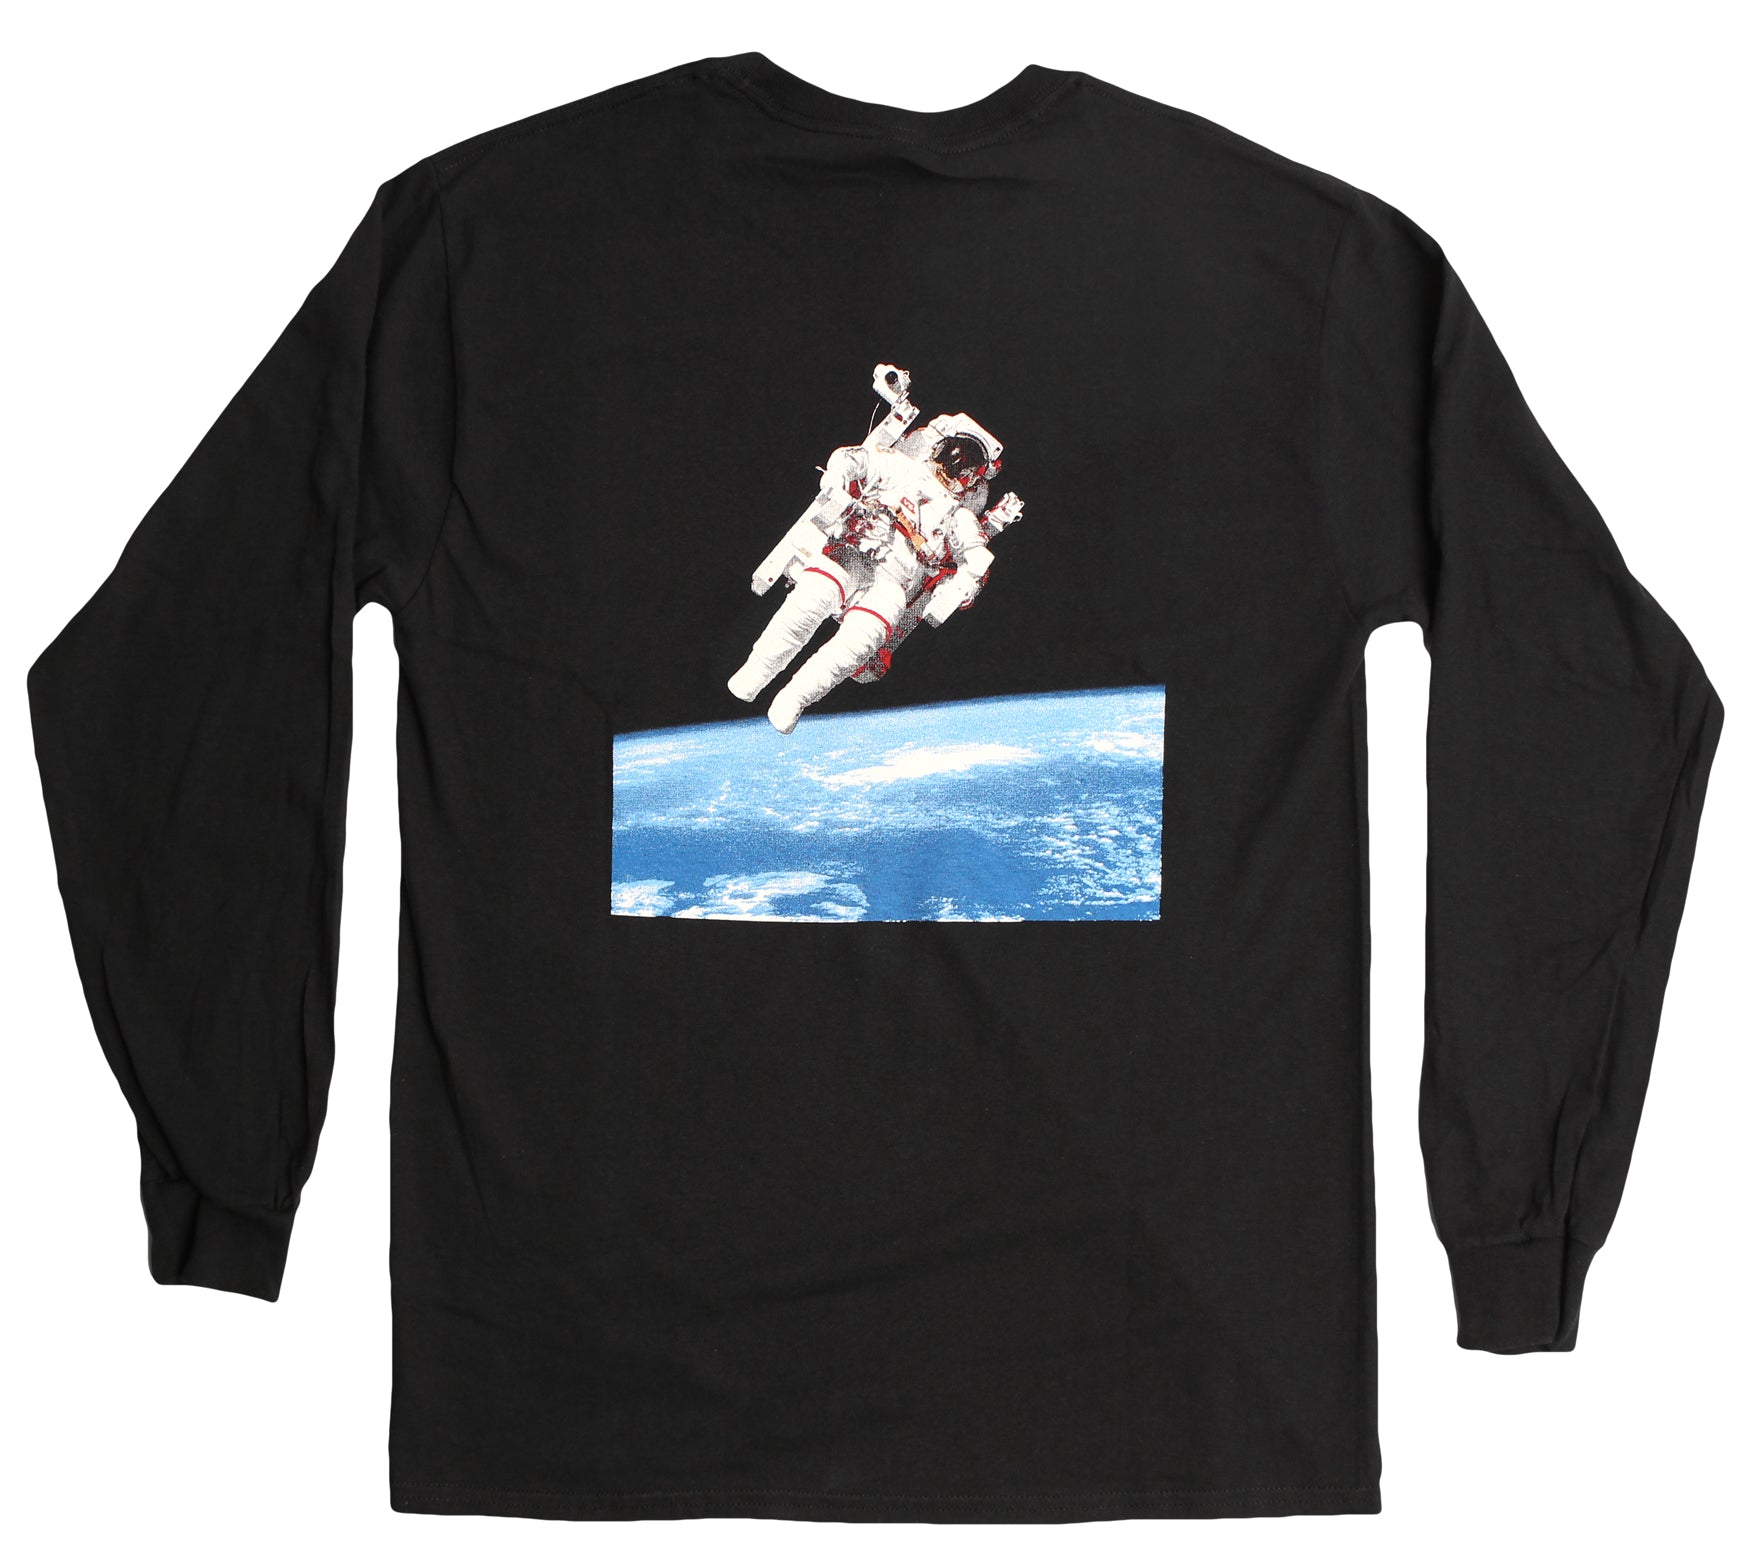 Astronaut Over Earth L/S black T-shirt by Altru Apparel